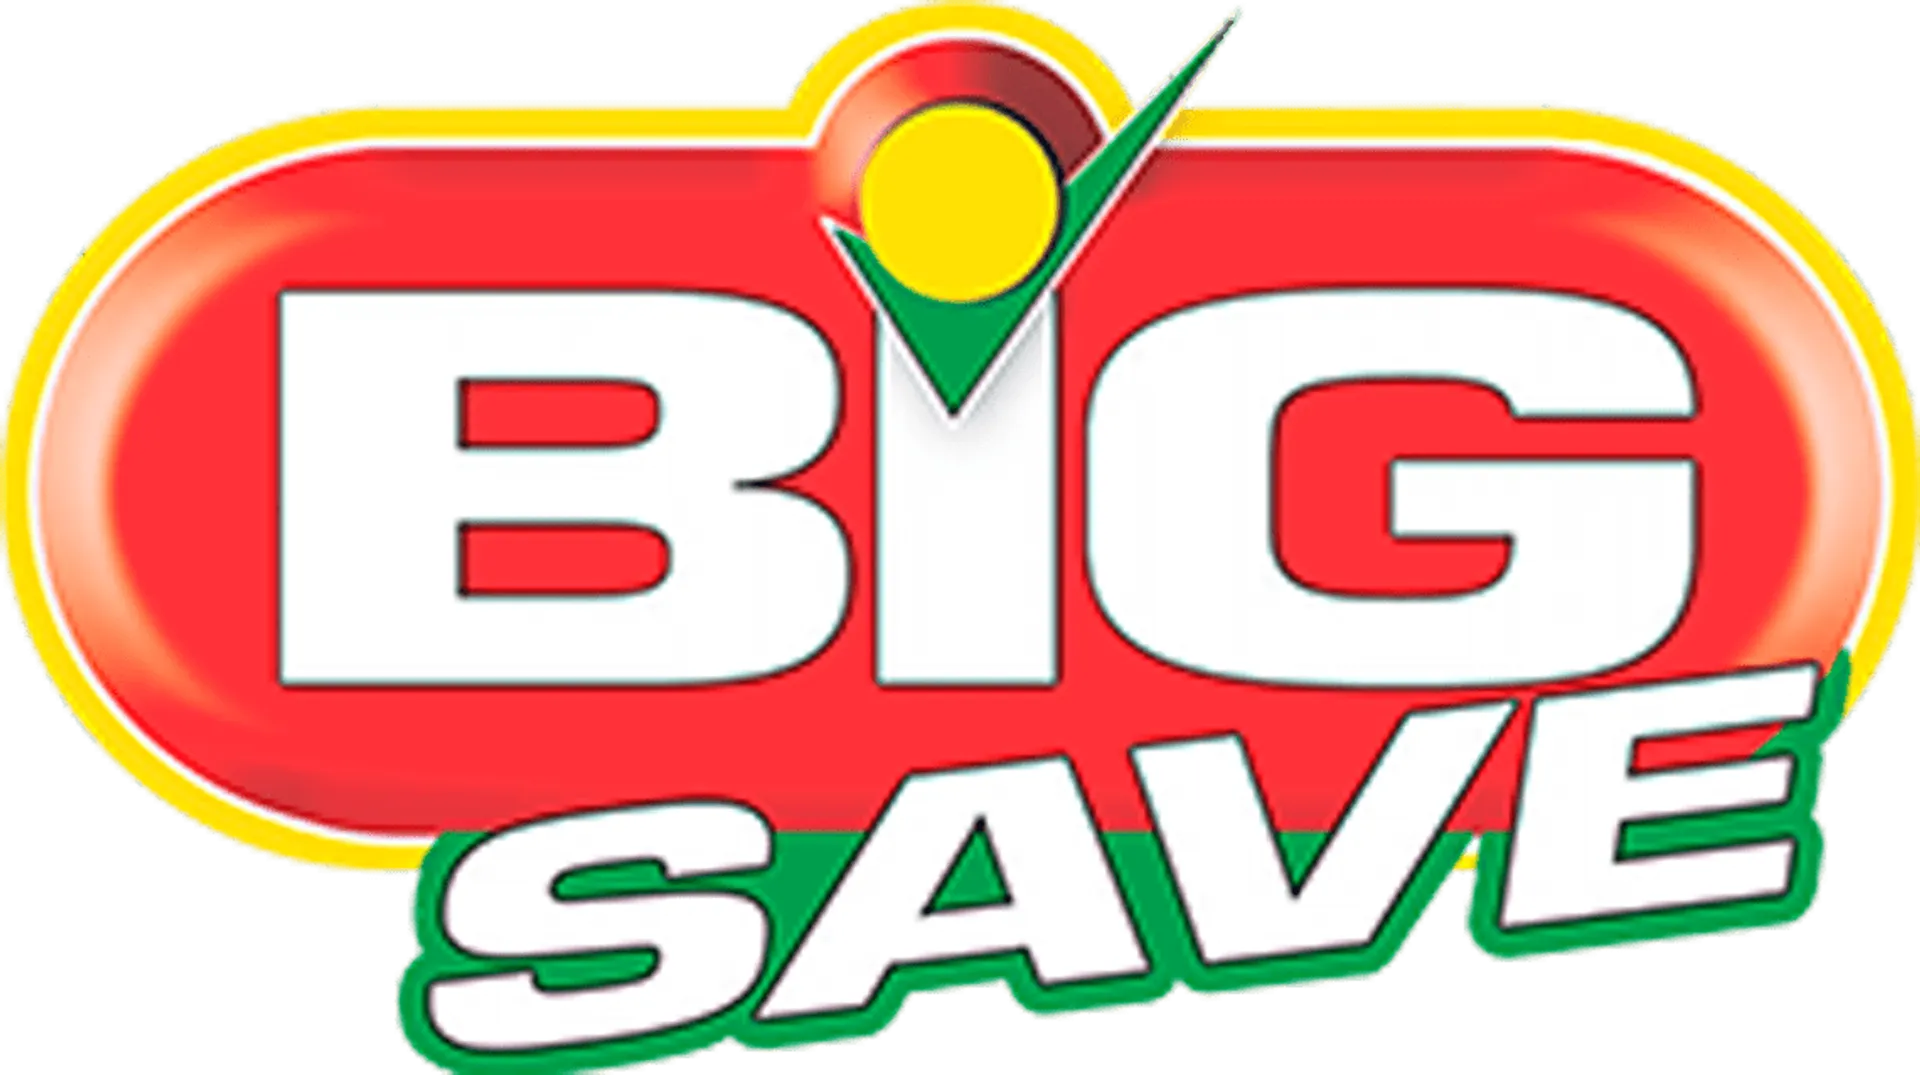 BIG SAVE logo current weekly ad